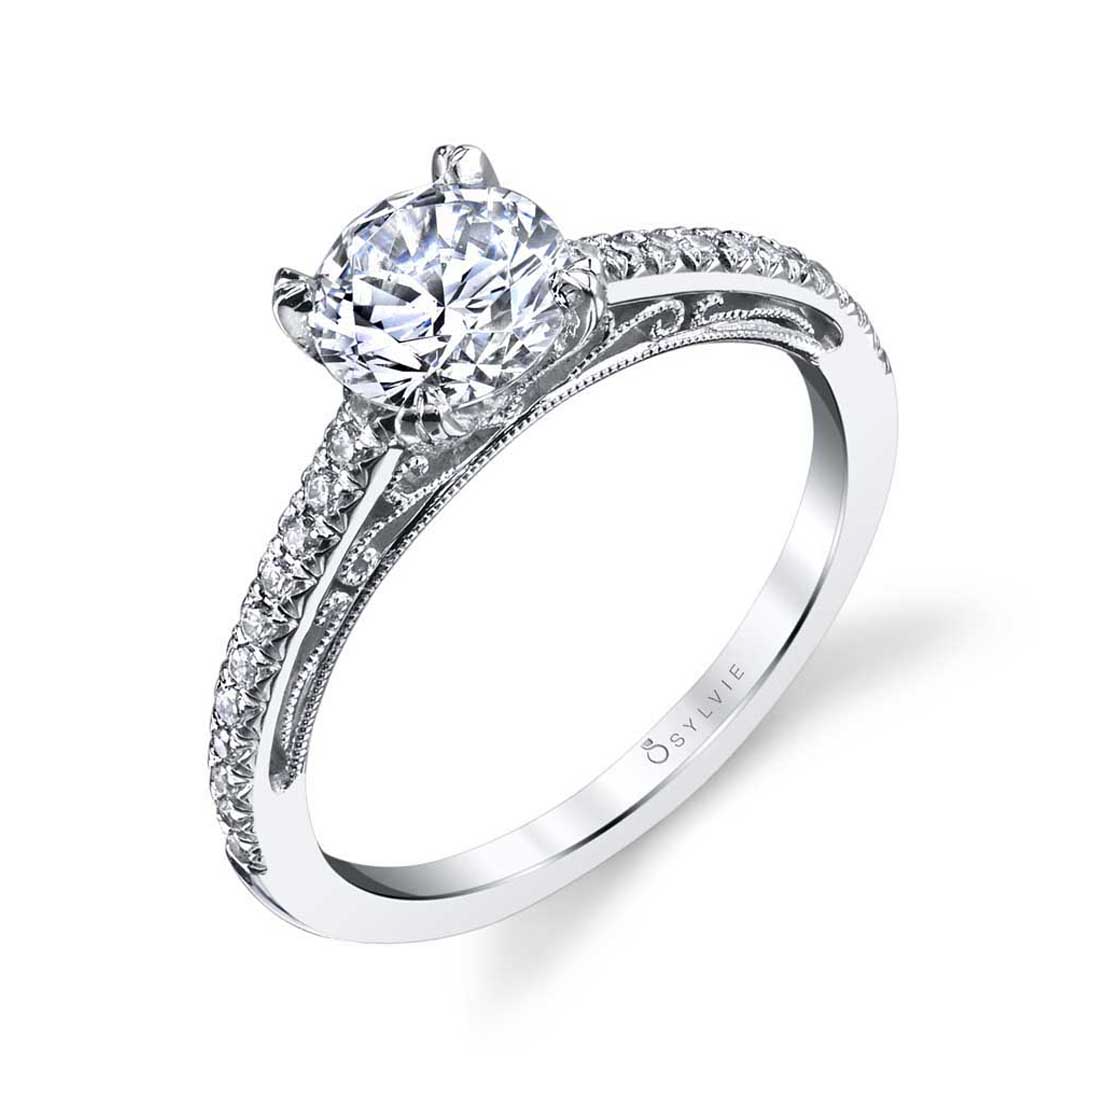 Buy Valentine Celebration Diamond Ring Online - Zaveribros